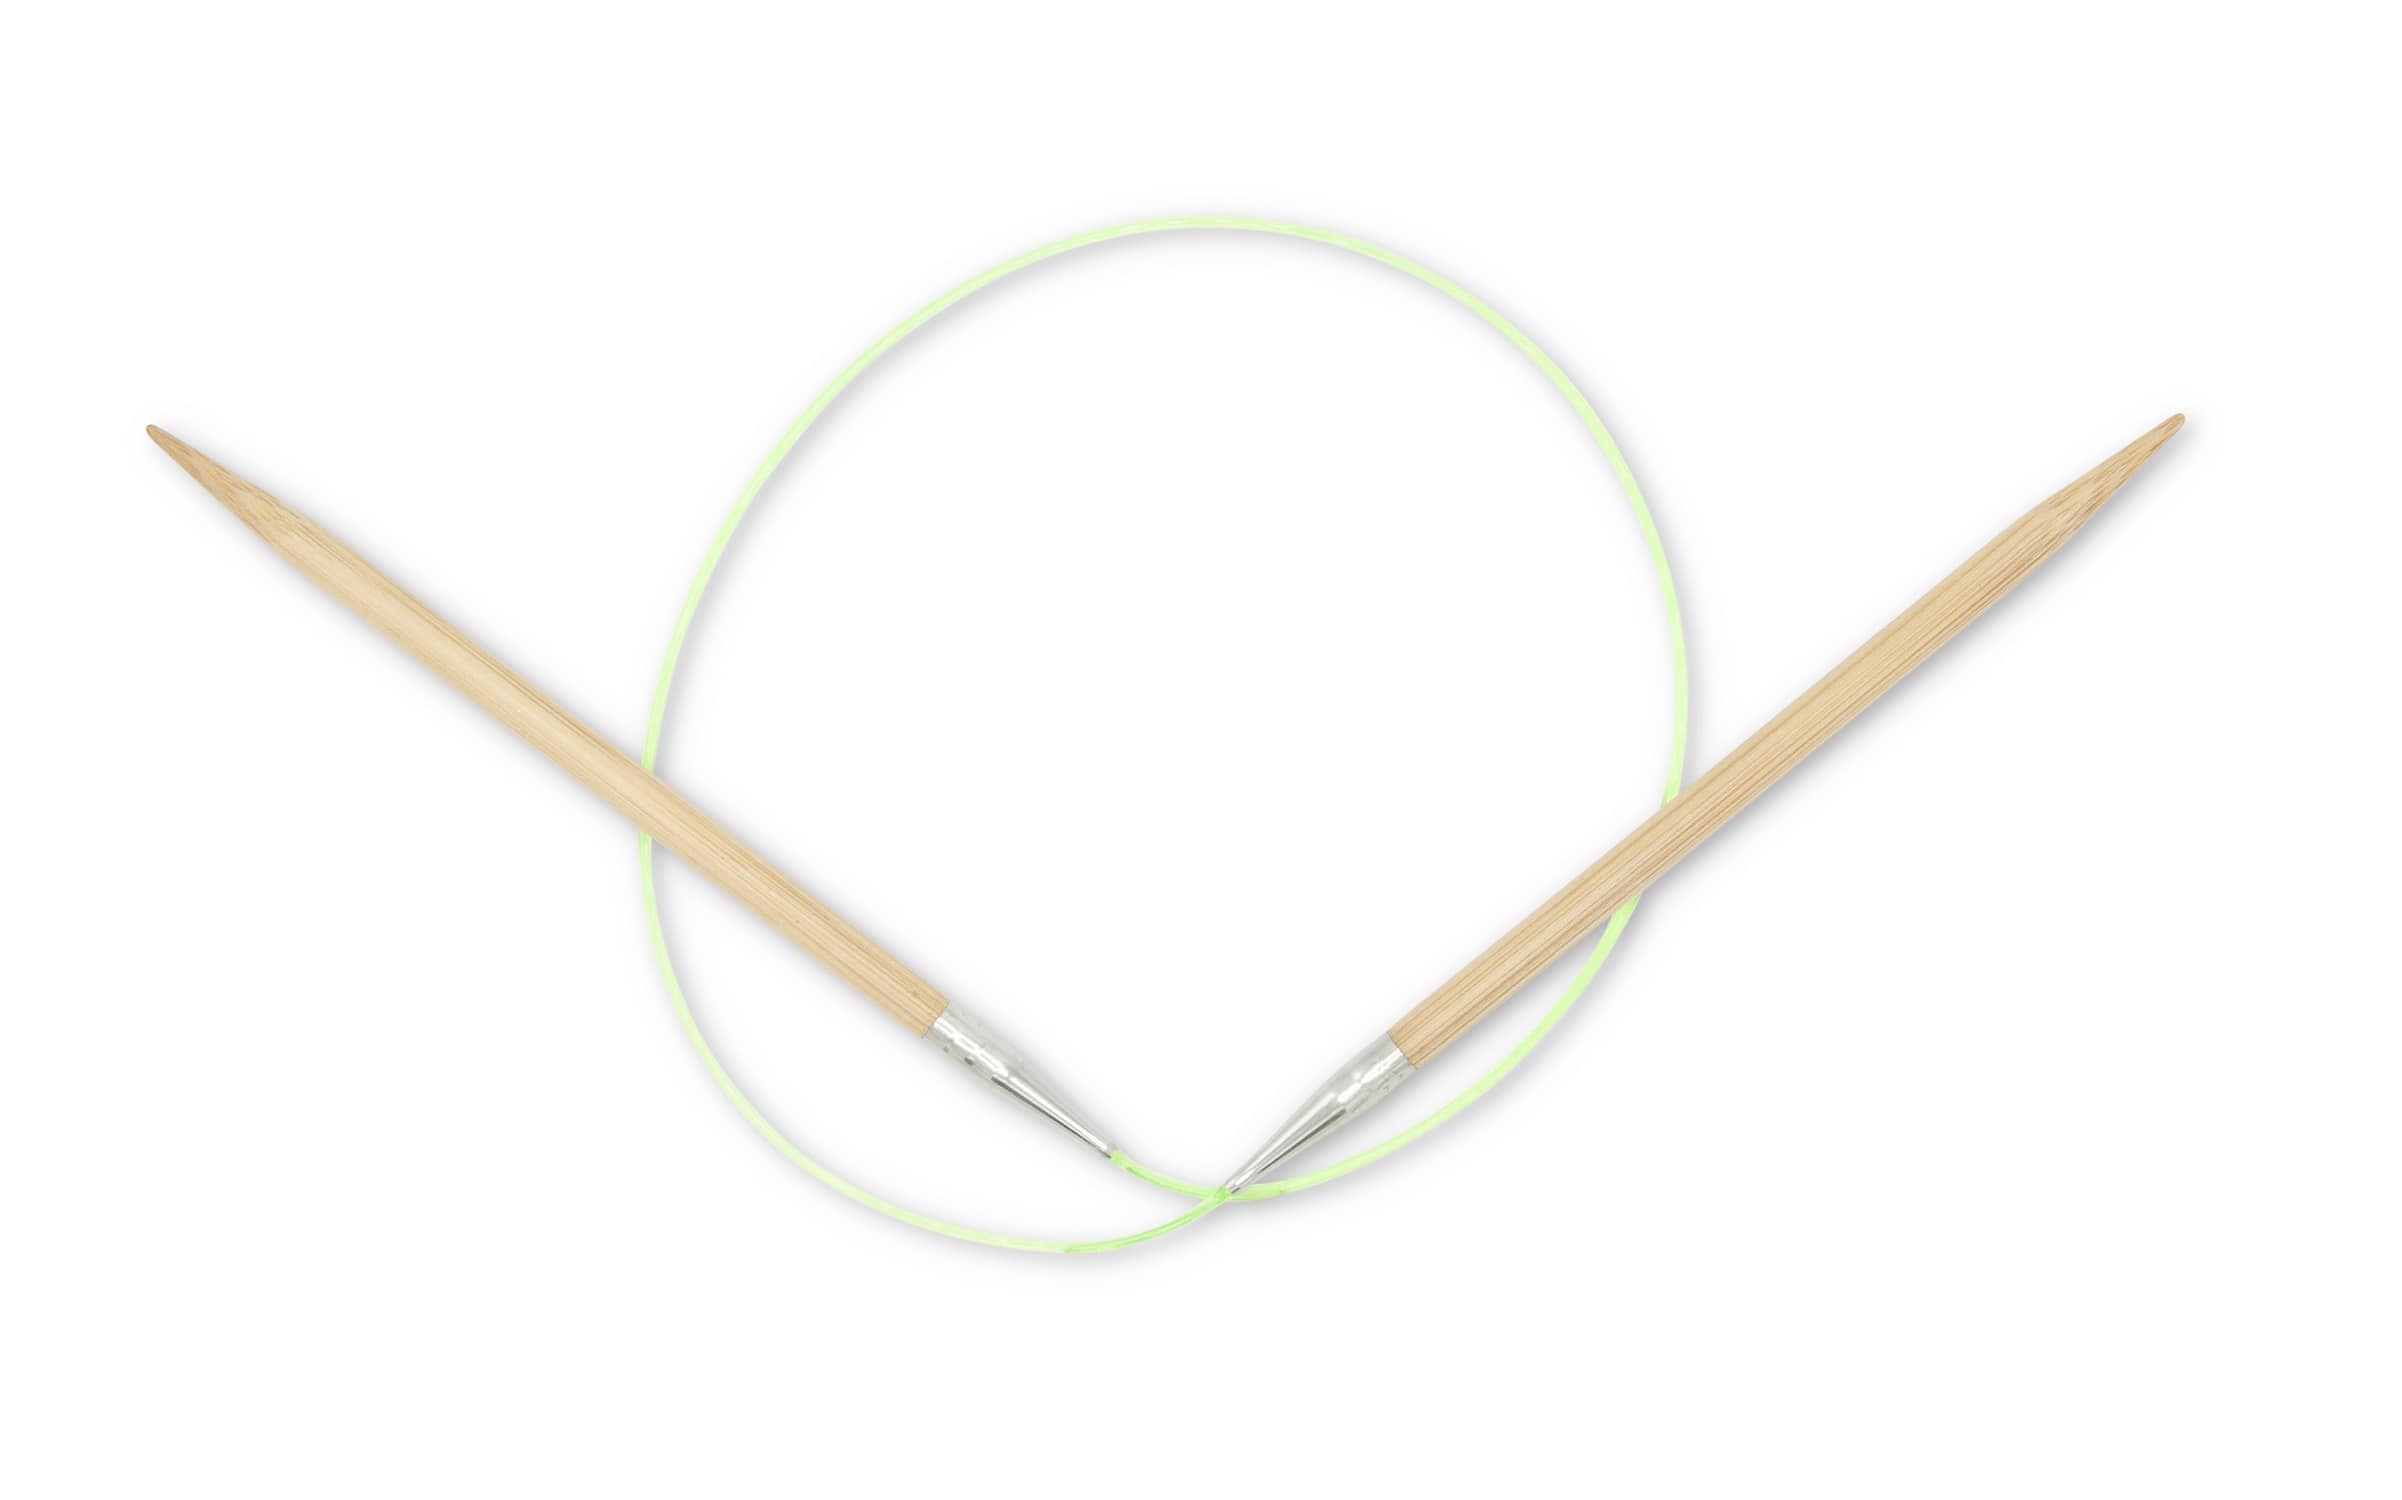  Clover 3016/36-13 Takumi Bamboo Circular 36-Inch Knitting  Needles, Size 13